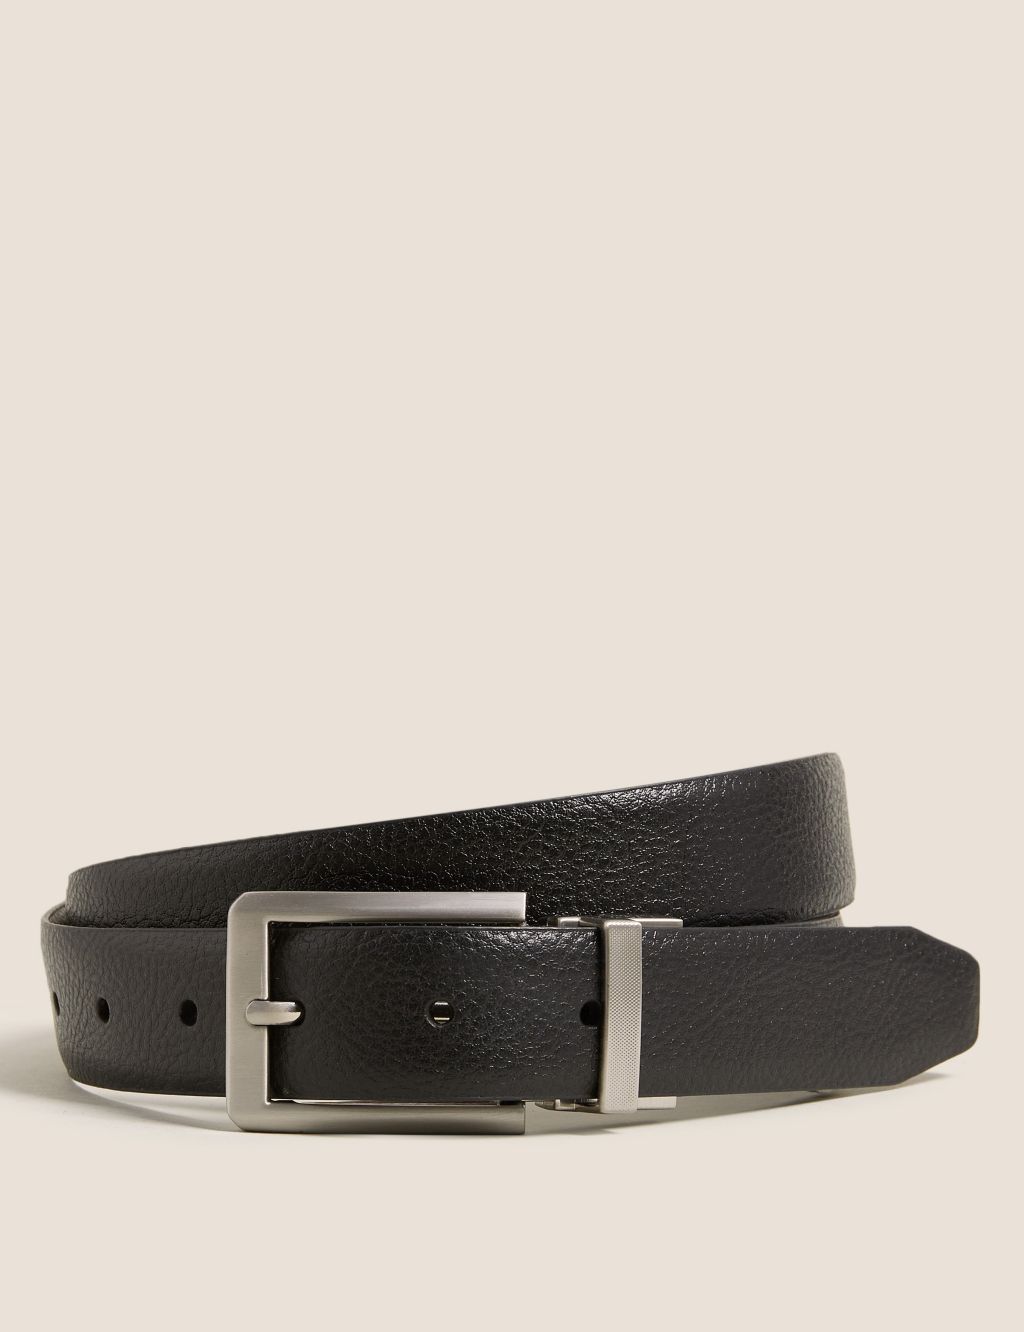 Leather Reversible Textured Belt image 1